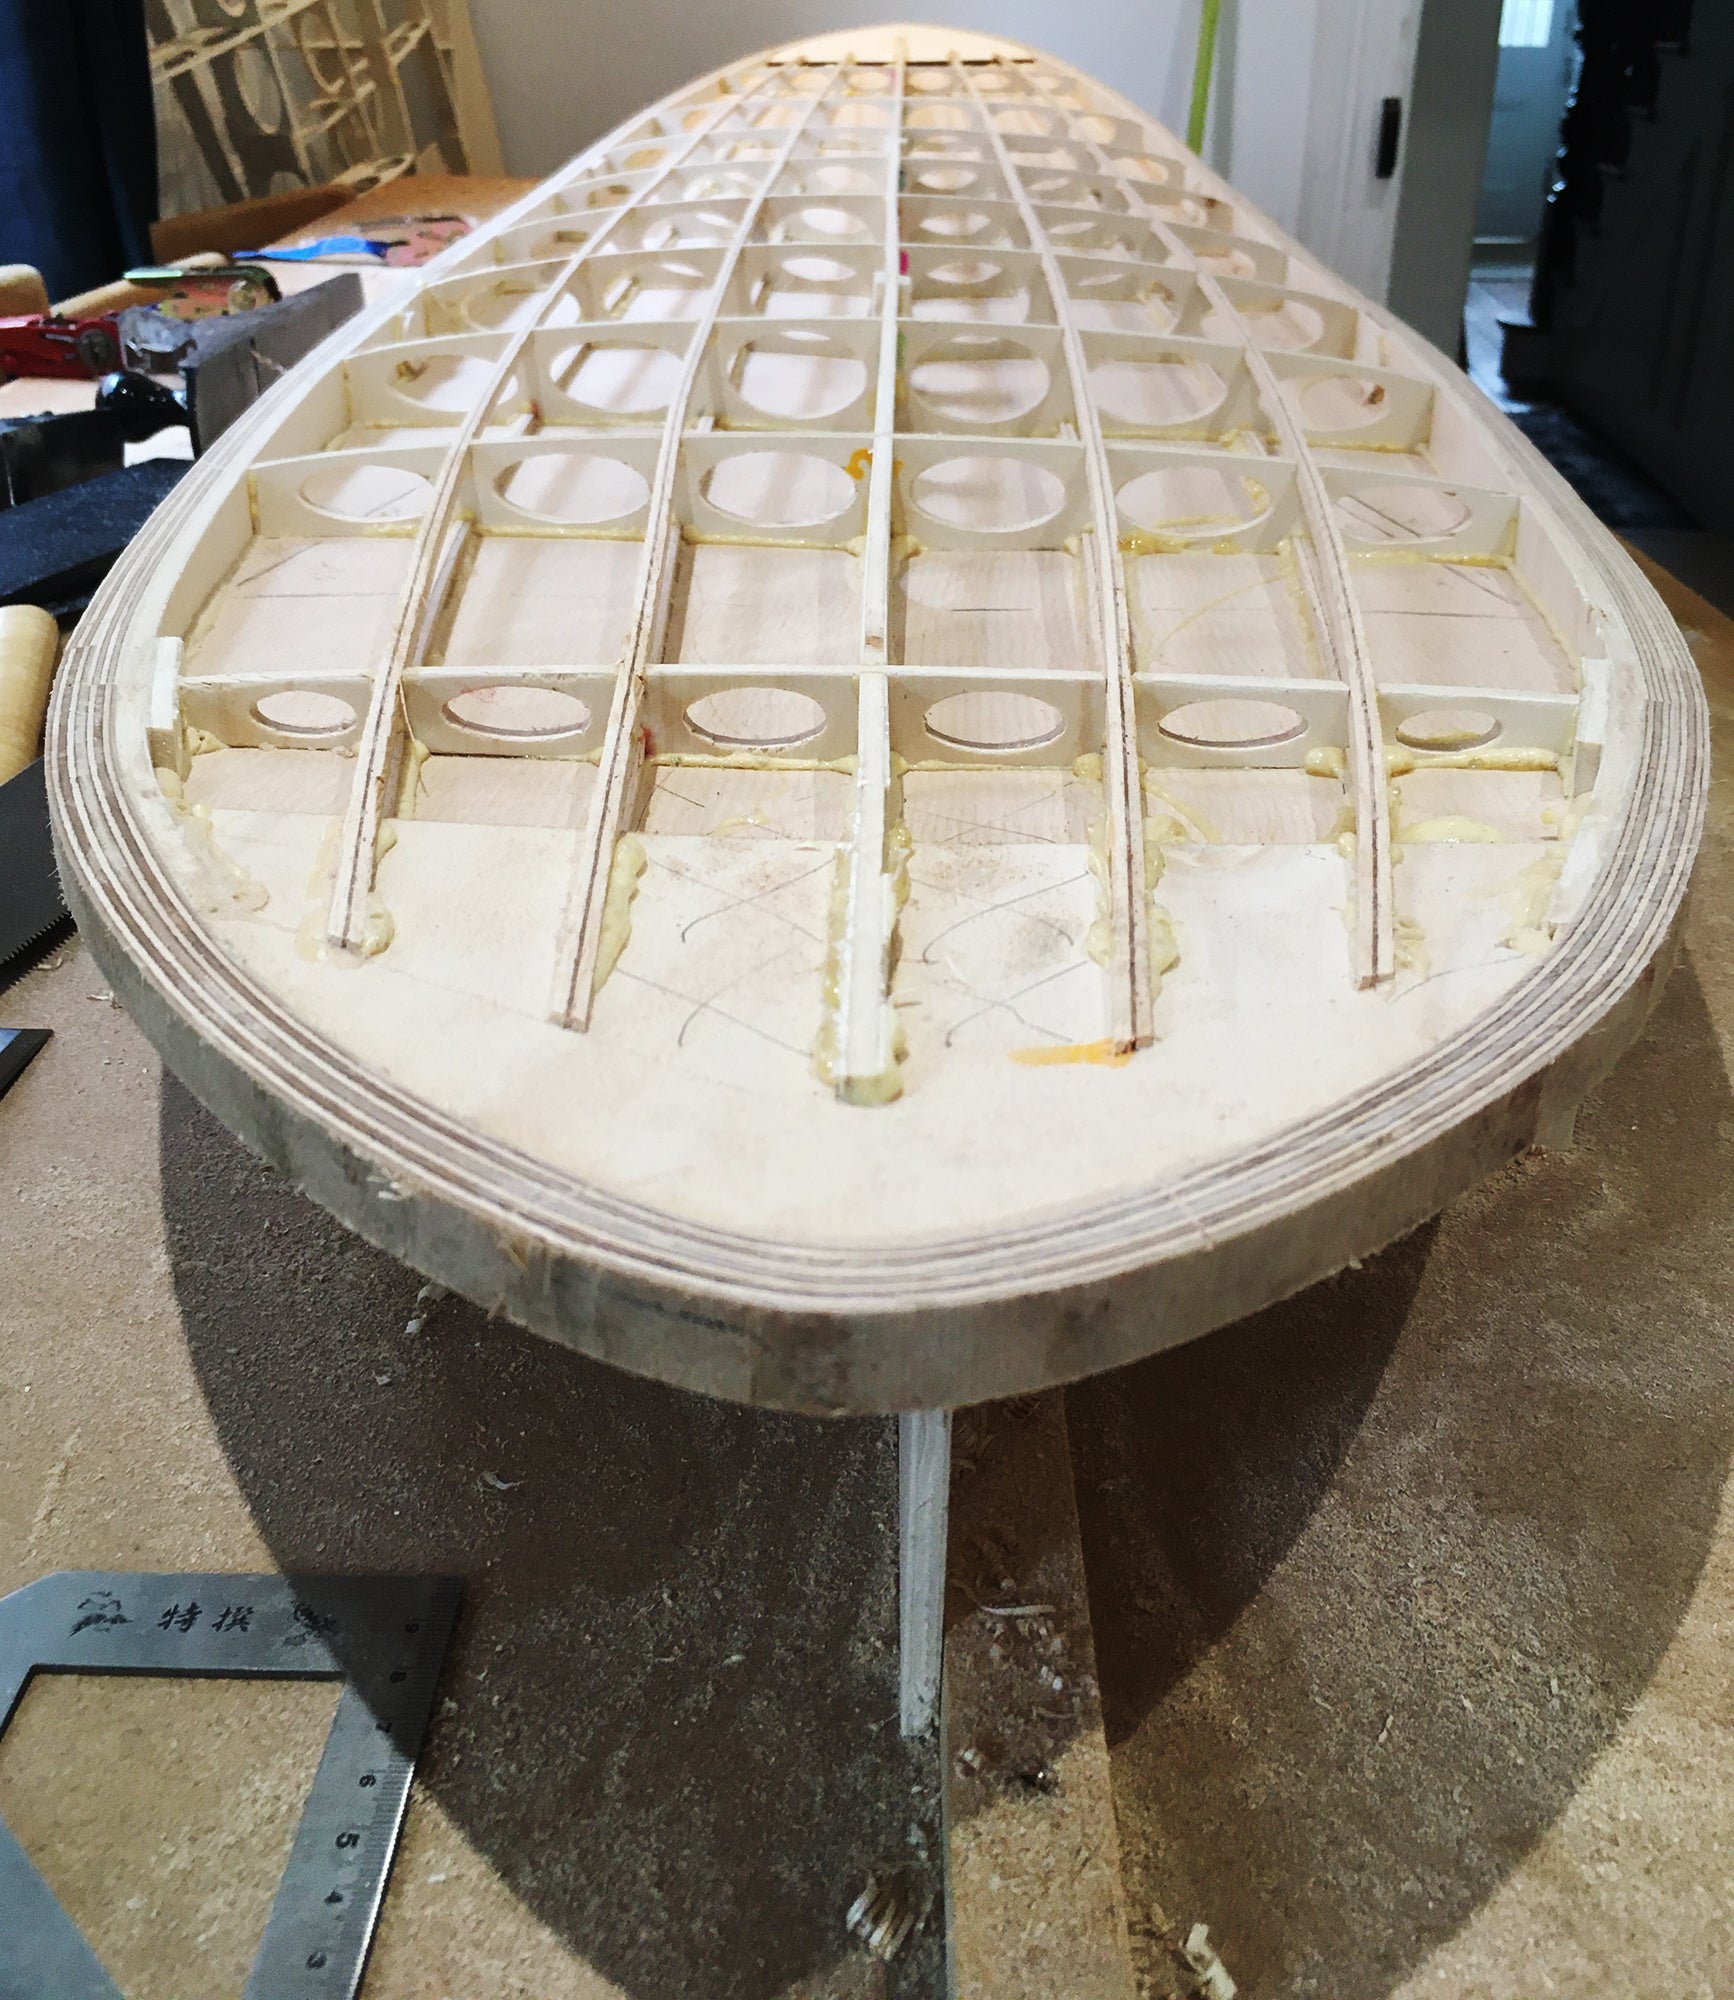 Stand Up Paddleboard DIY Wooden Surfboard Kit. 10', 29" 200 Litre